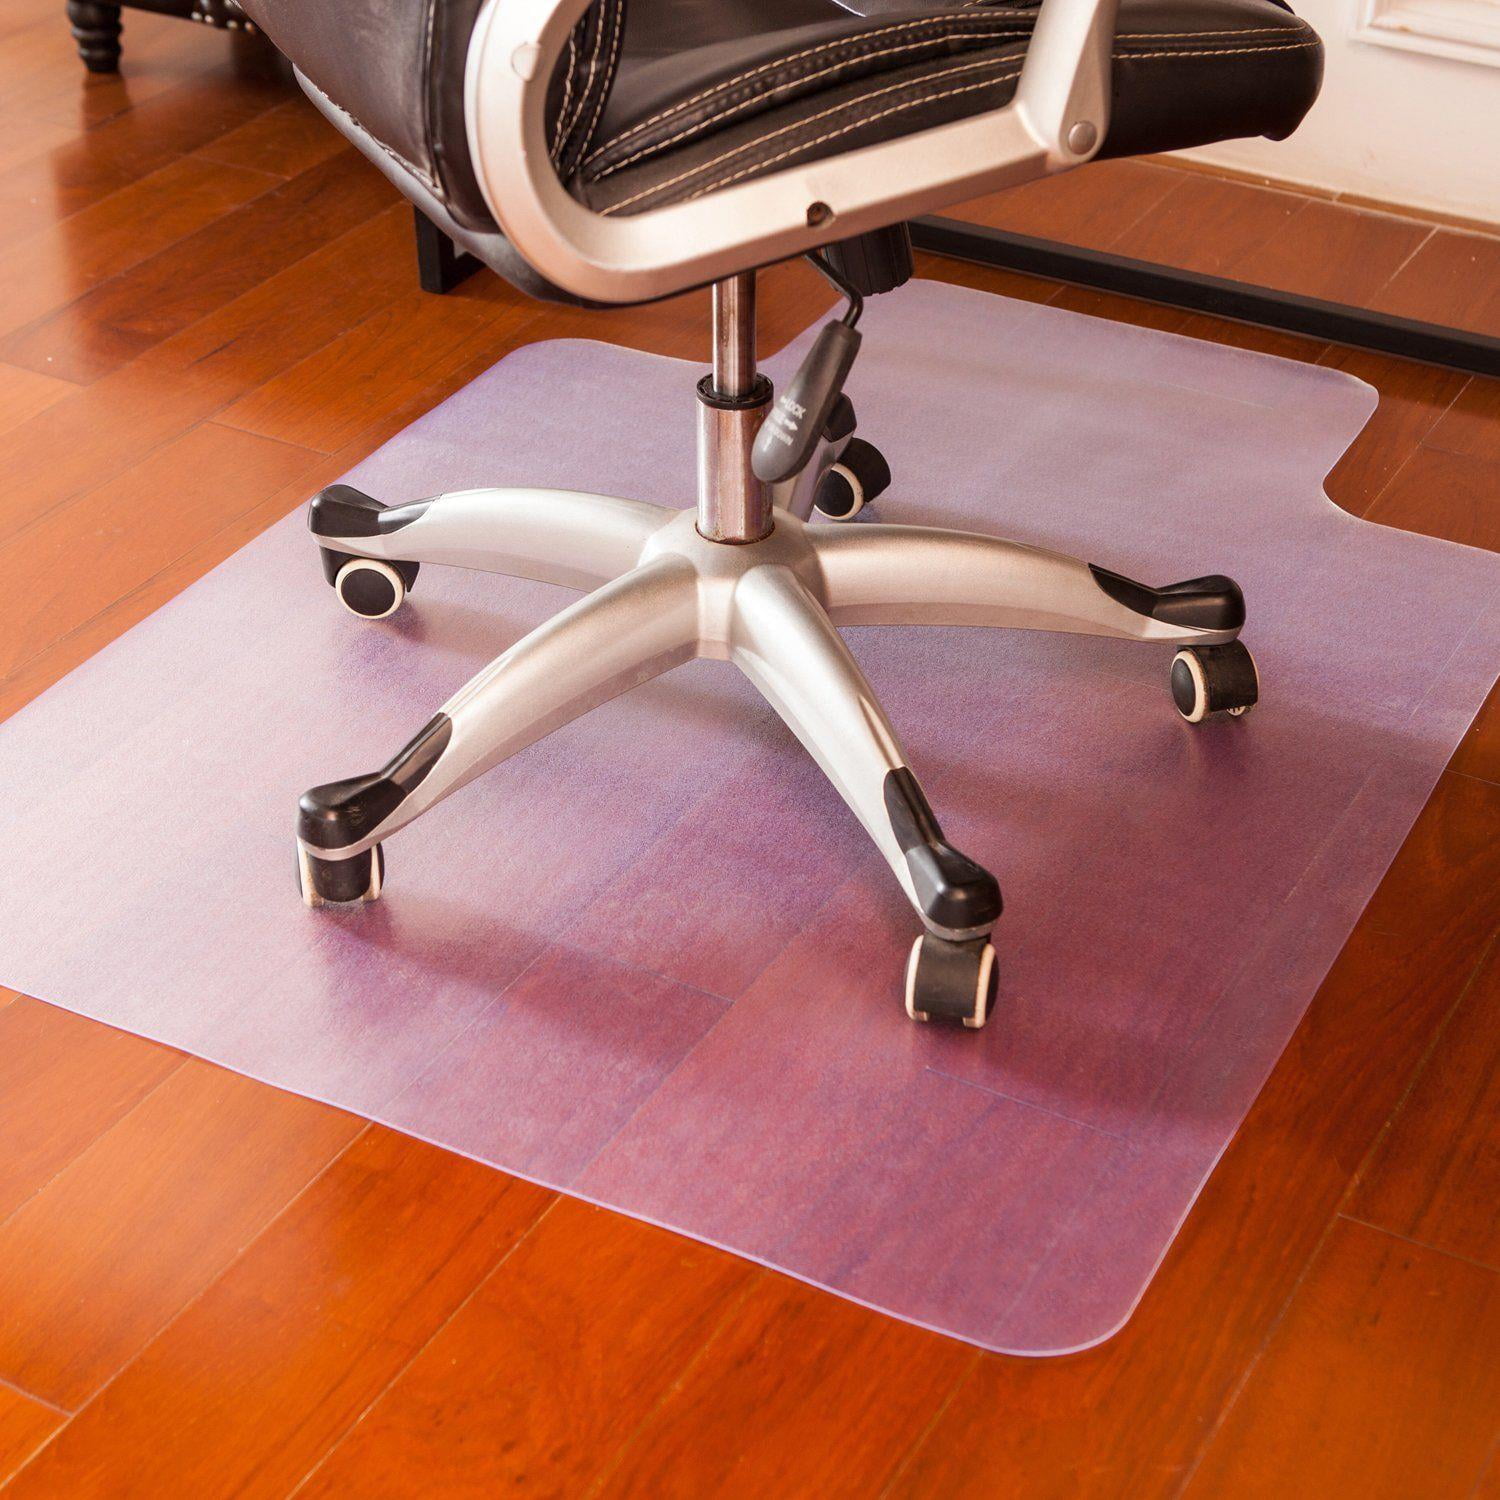 Ktaxon Office Chair Mat For Hardwood, Floor Mats For Chairs On Laminate Floors